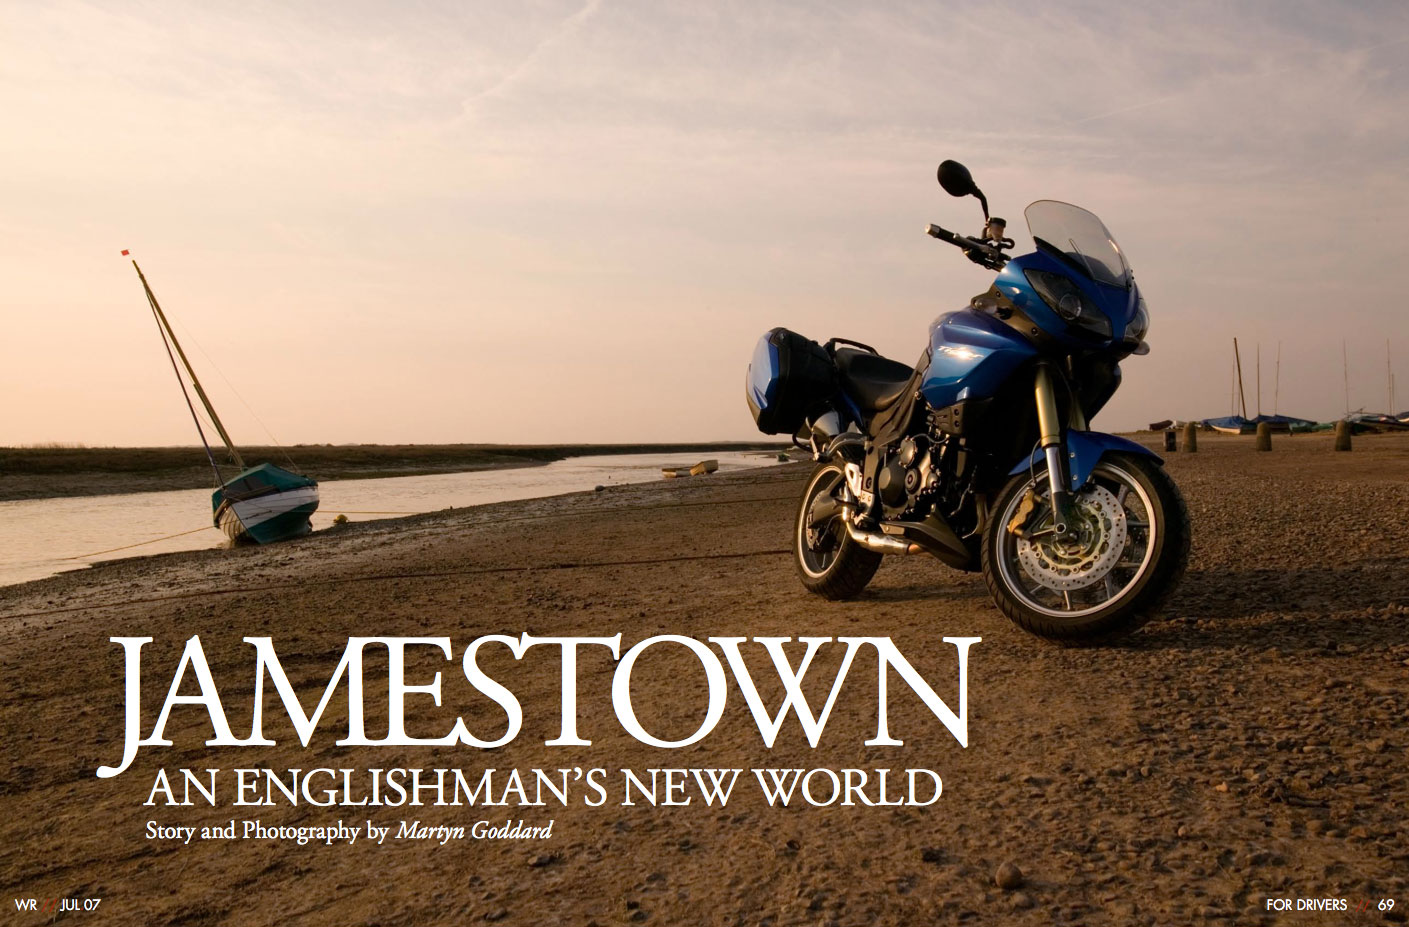 Jamestown – an Englishman’s new world